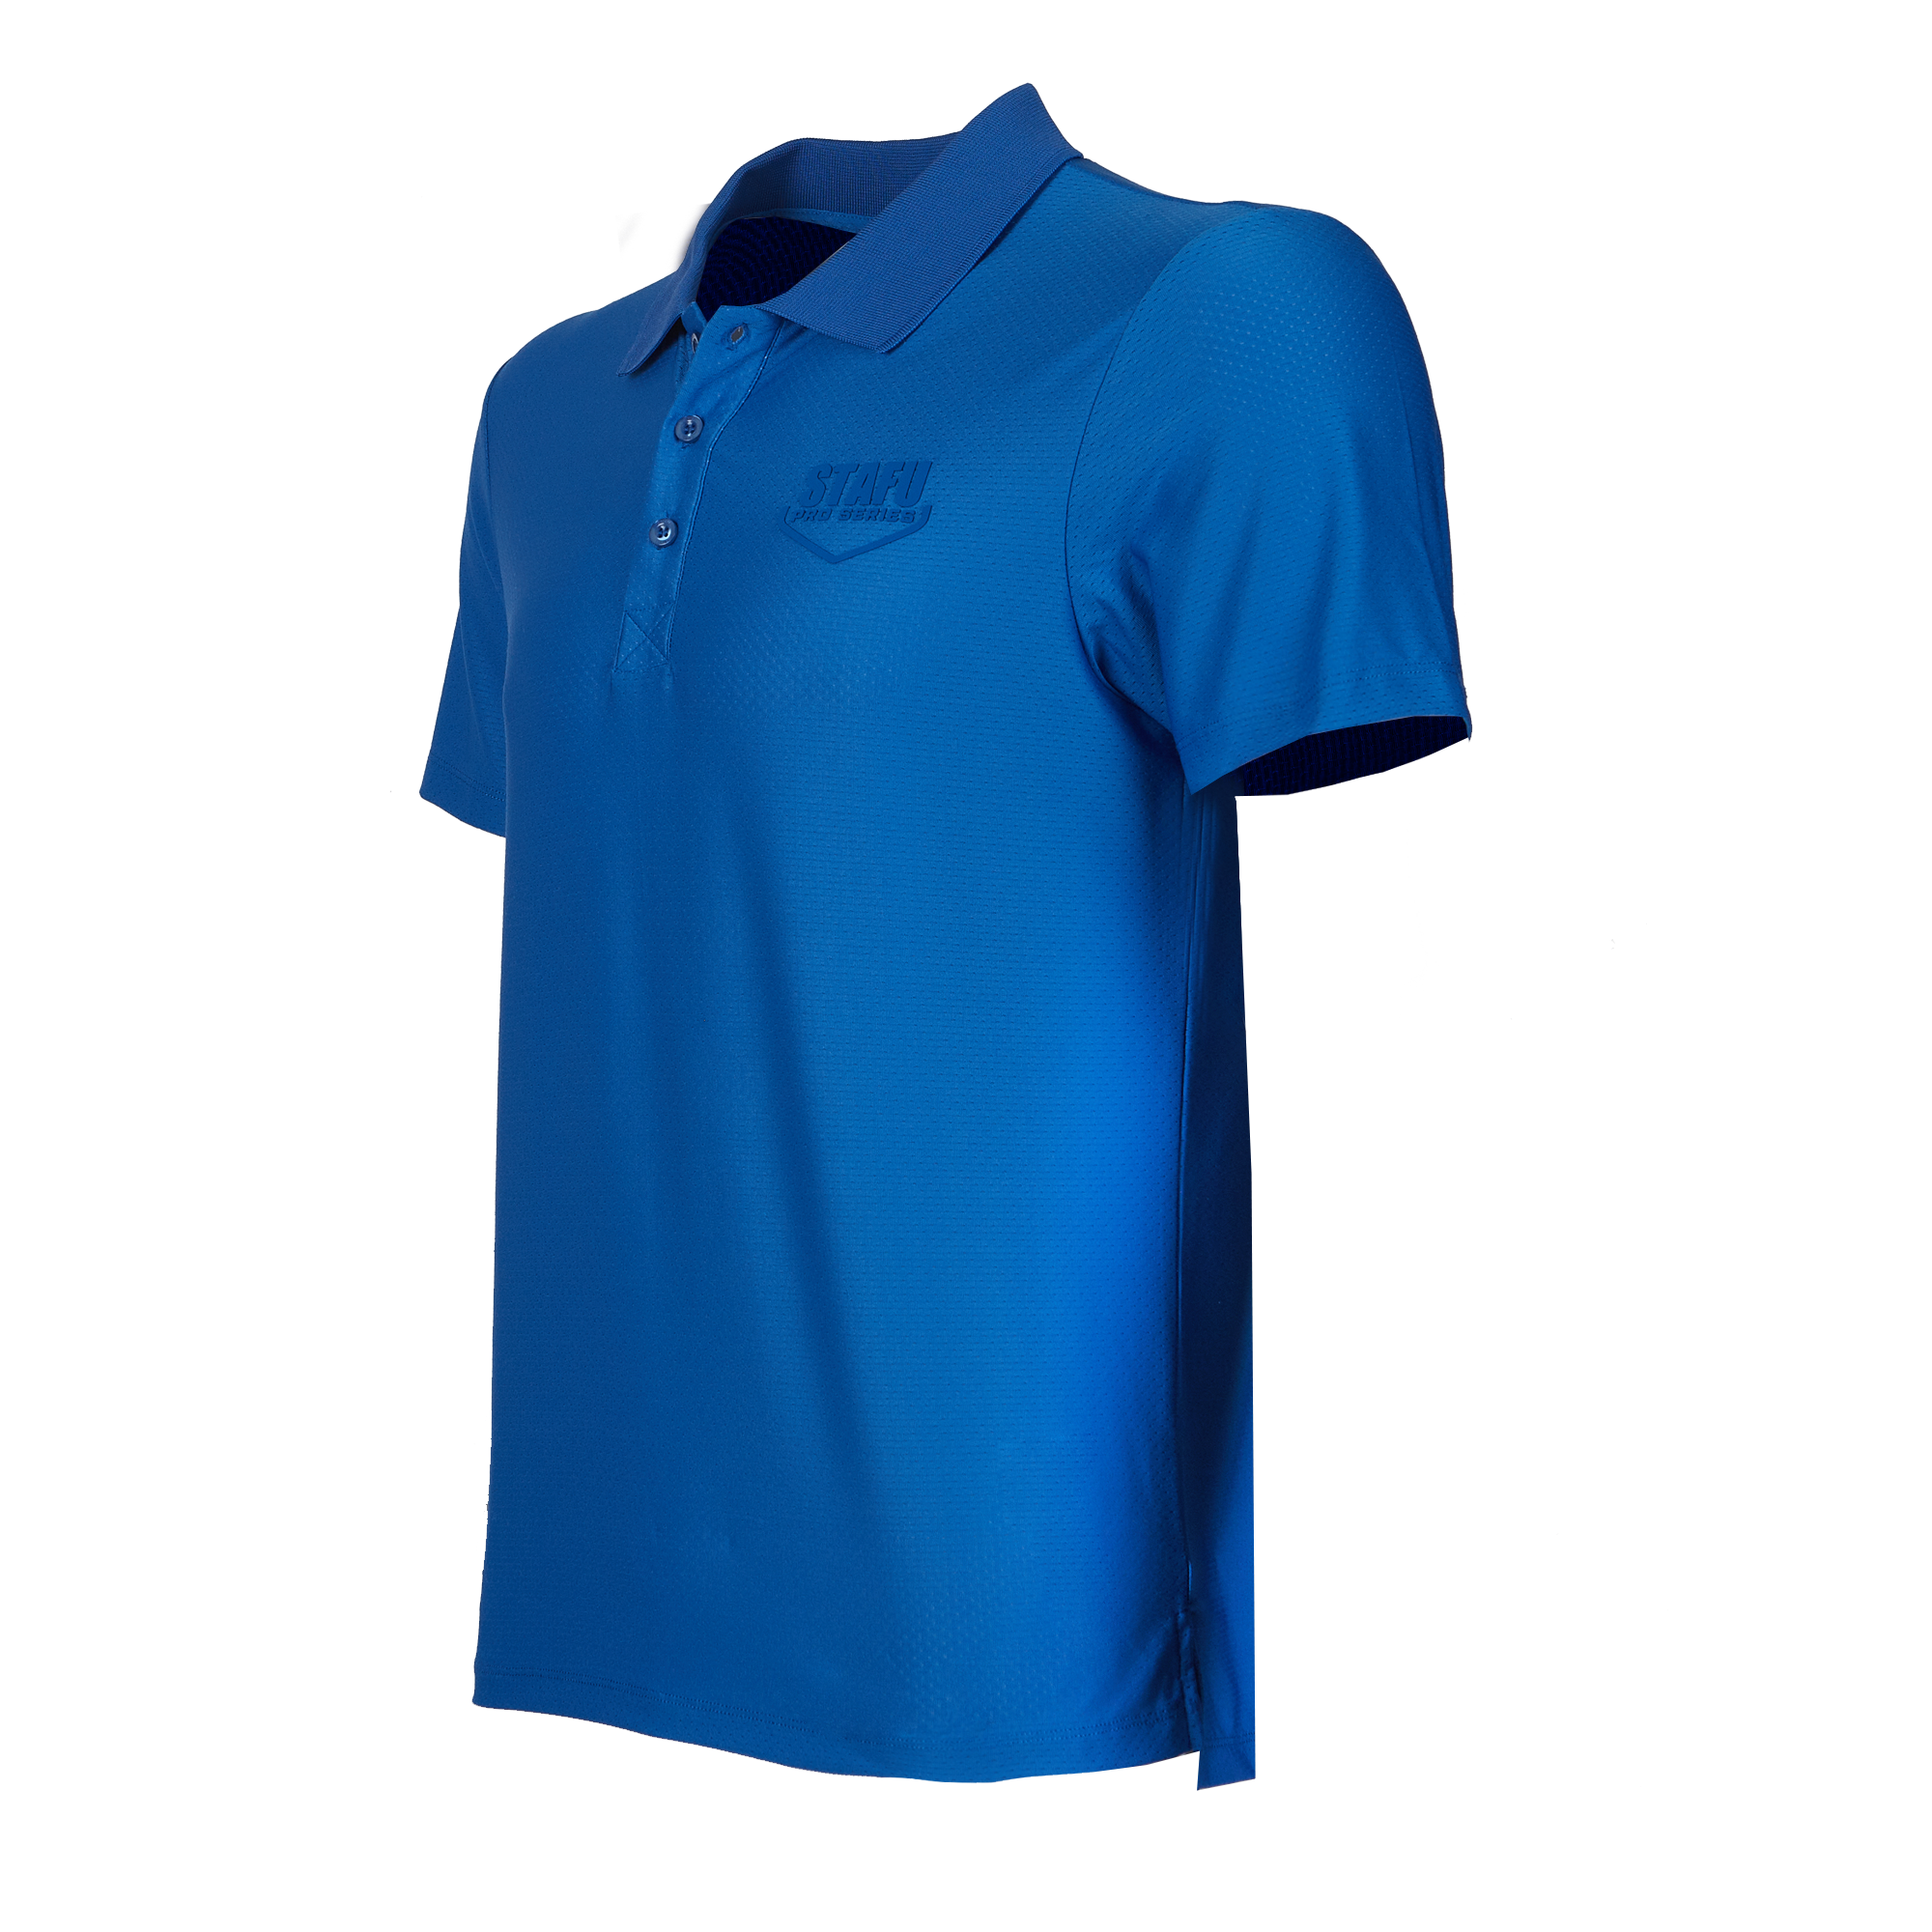 League Air Men's Short Sleeve Fisherman Sailor Blue UV Protected Polo Shirt